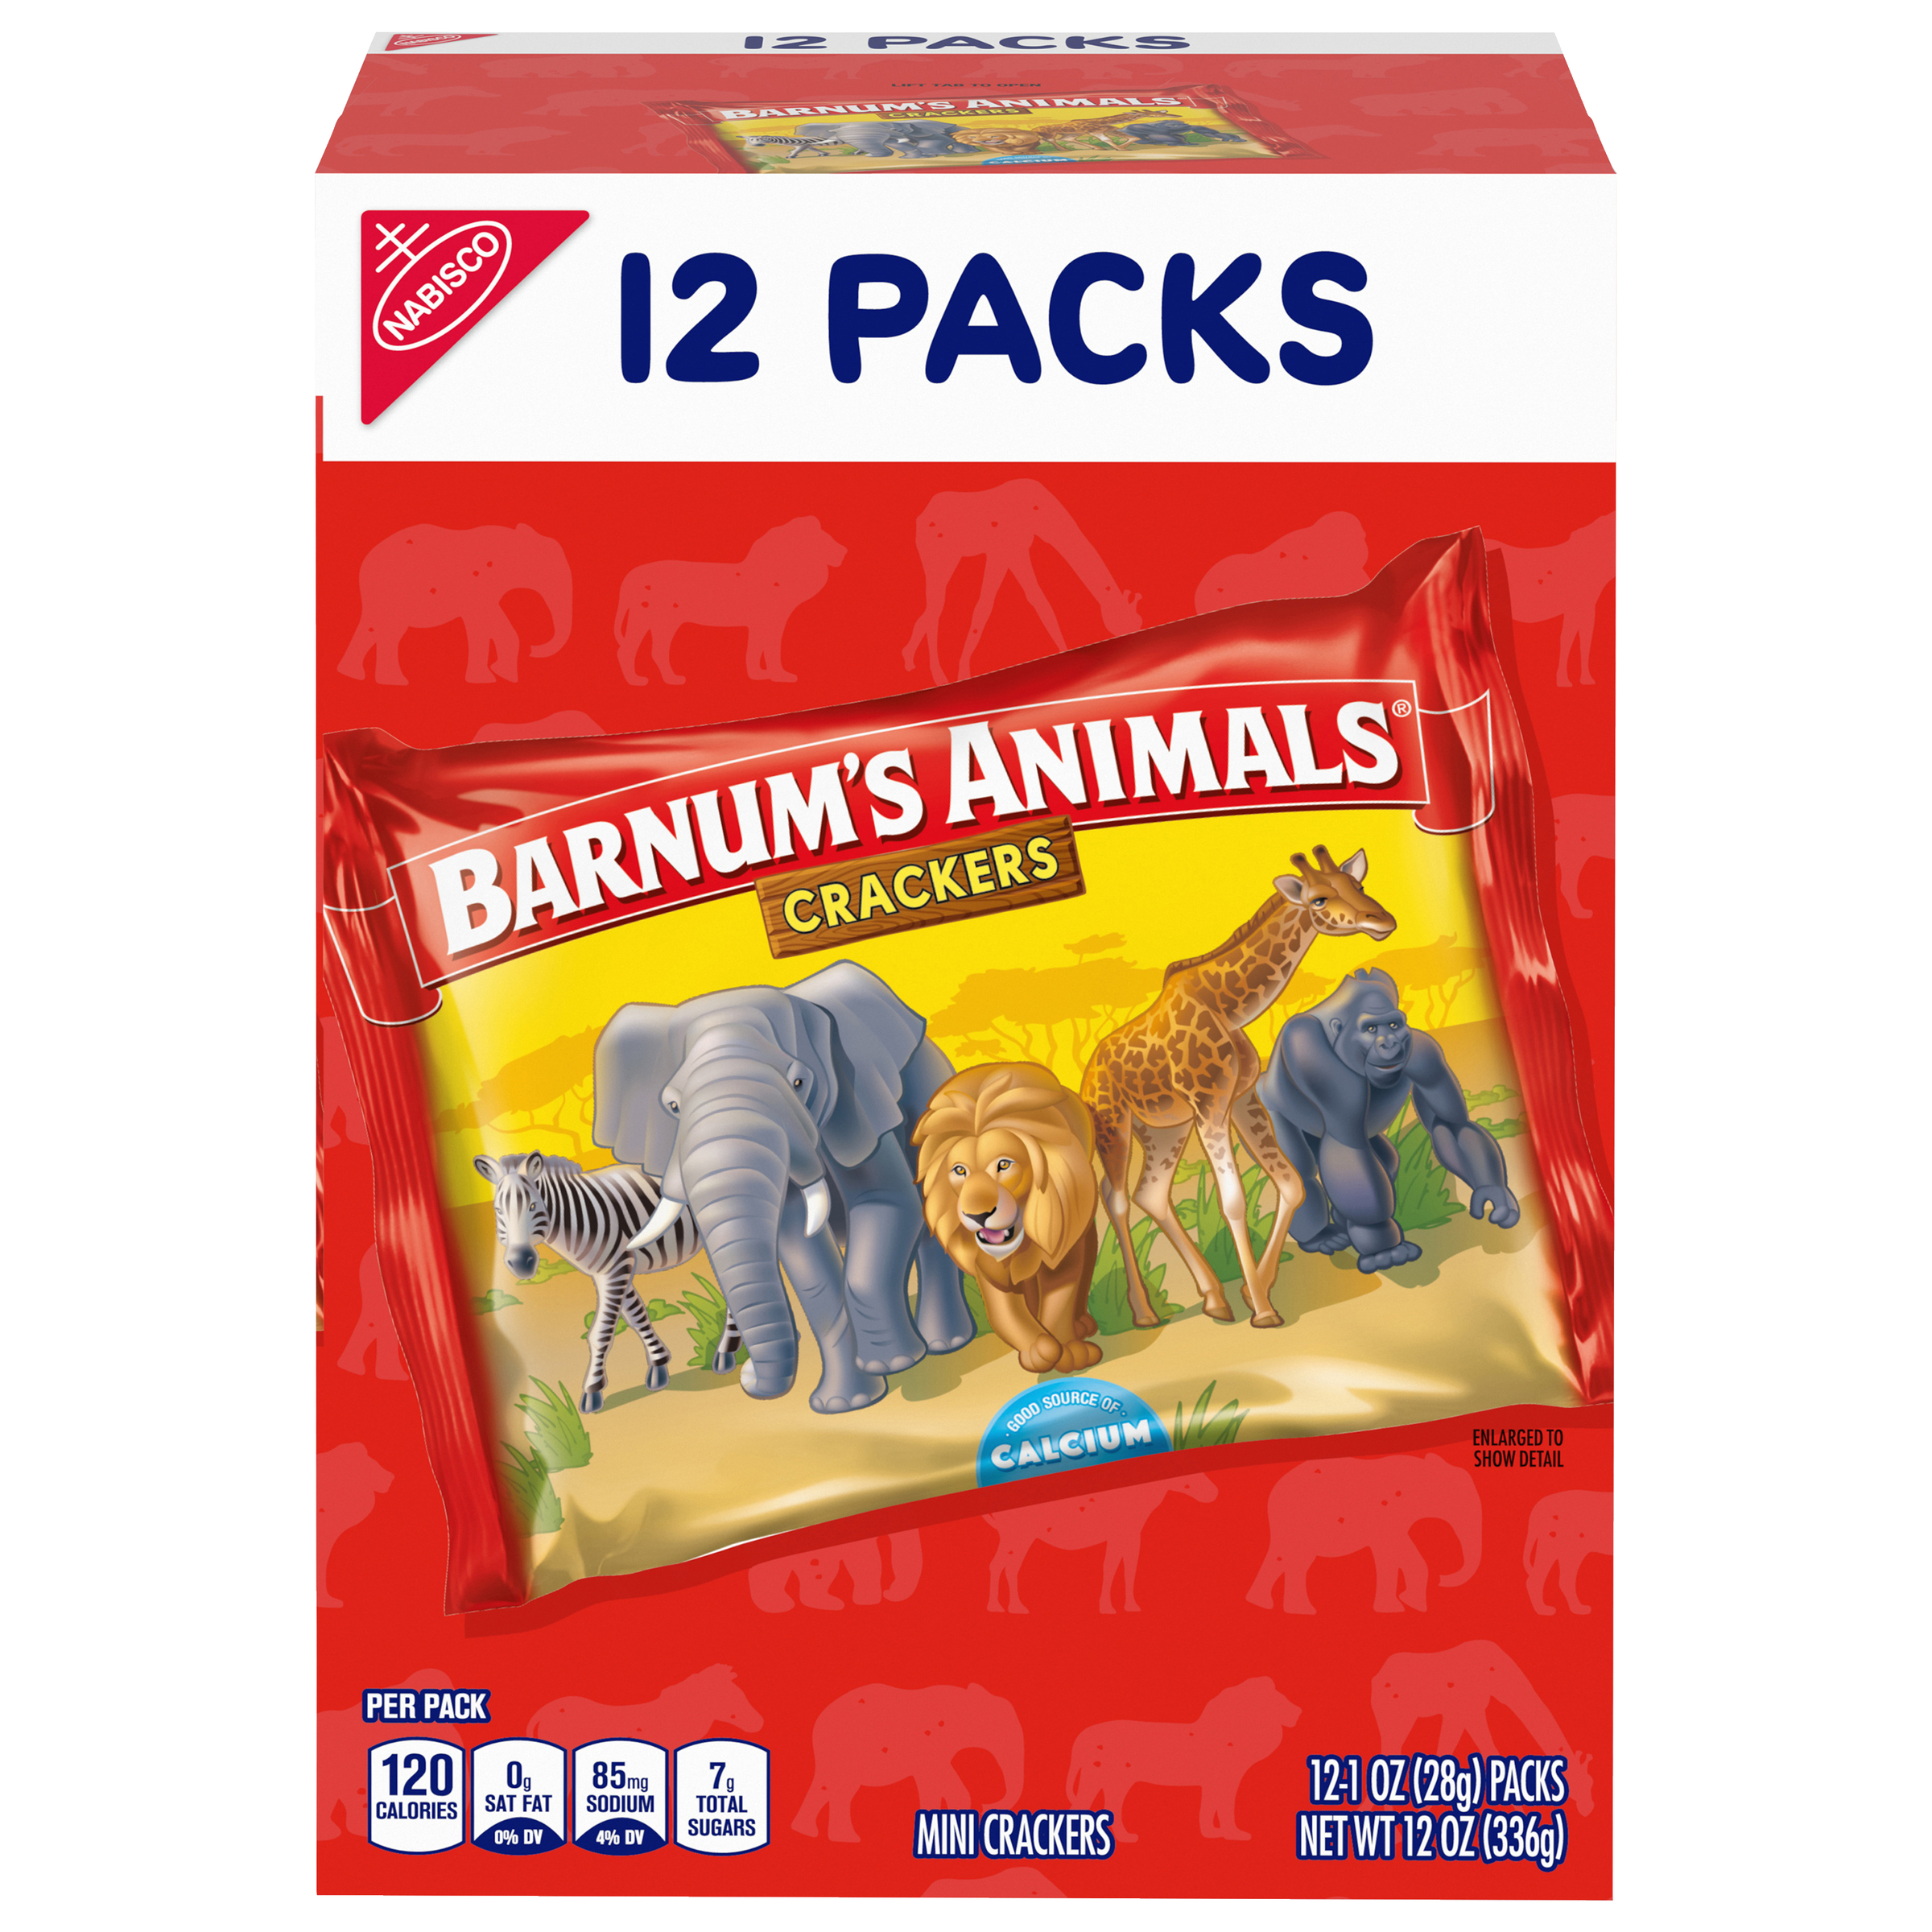 BARNUMS Multipack Crackers 12 oz